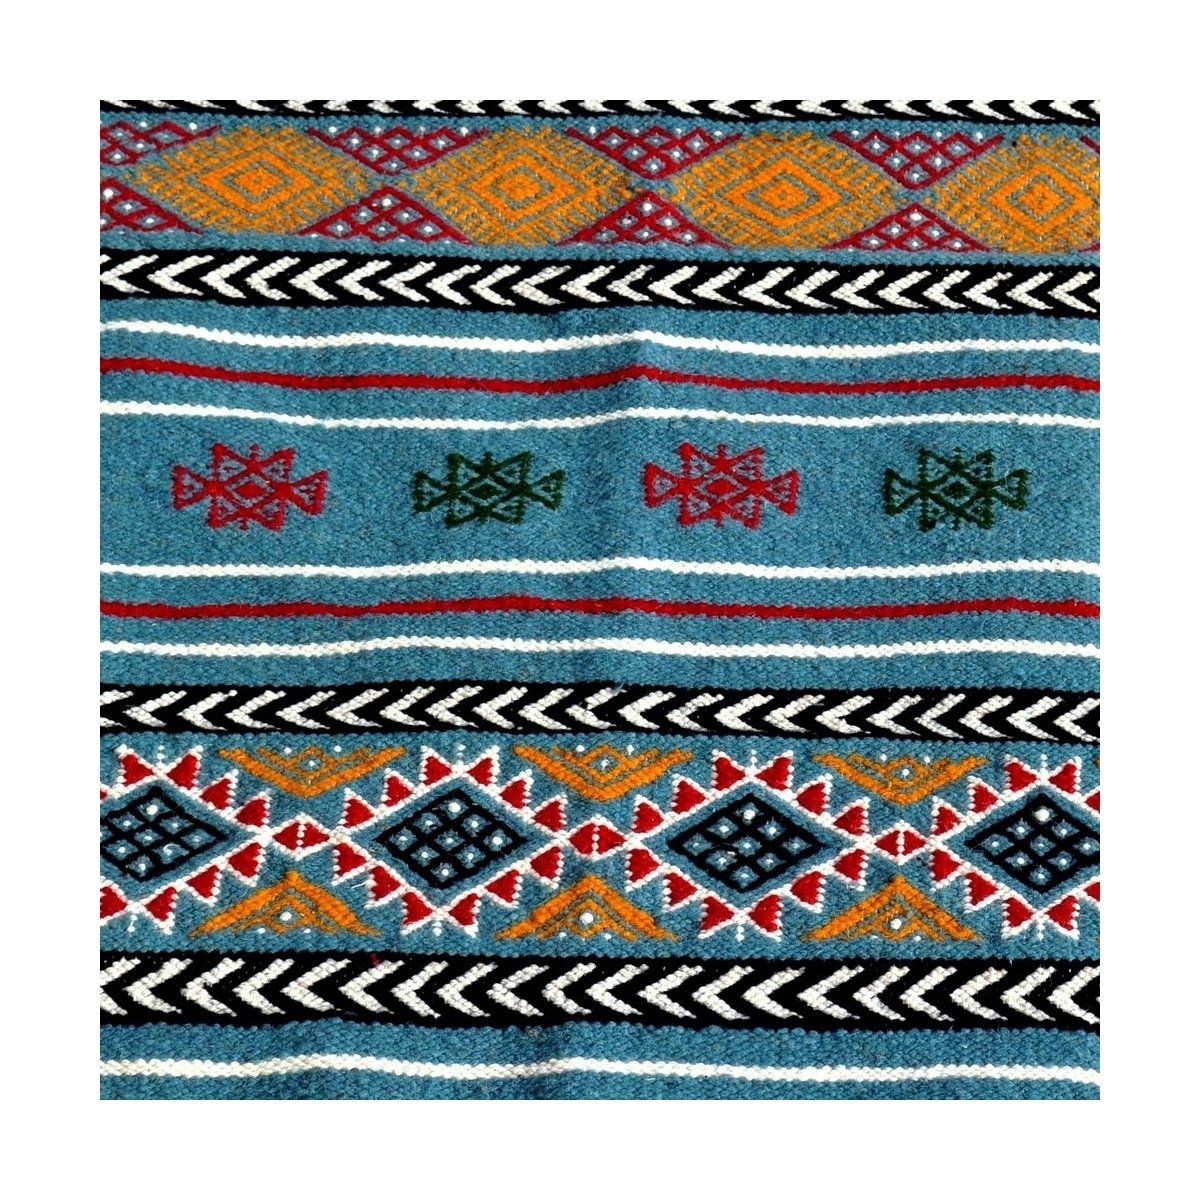 Tapete berbere Tapete Kilim Bayen 110x195 Turquesa/Amarelo/Vermelho (Tecidos à mão, Lã) Tapete tunisiano kilim, estilo marroquin